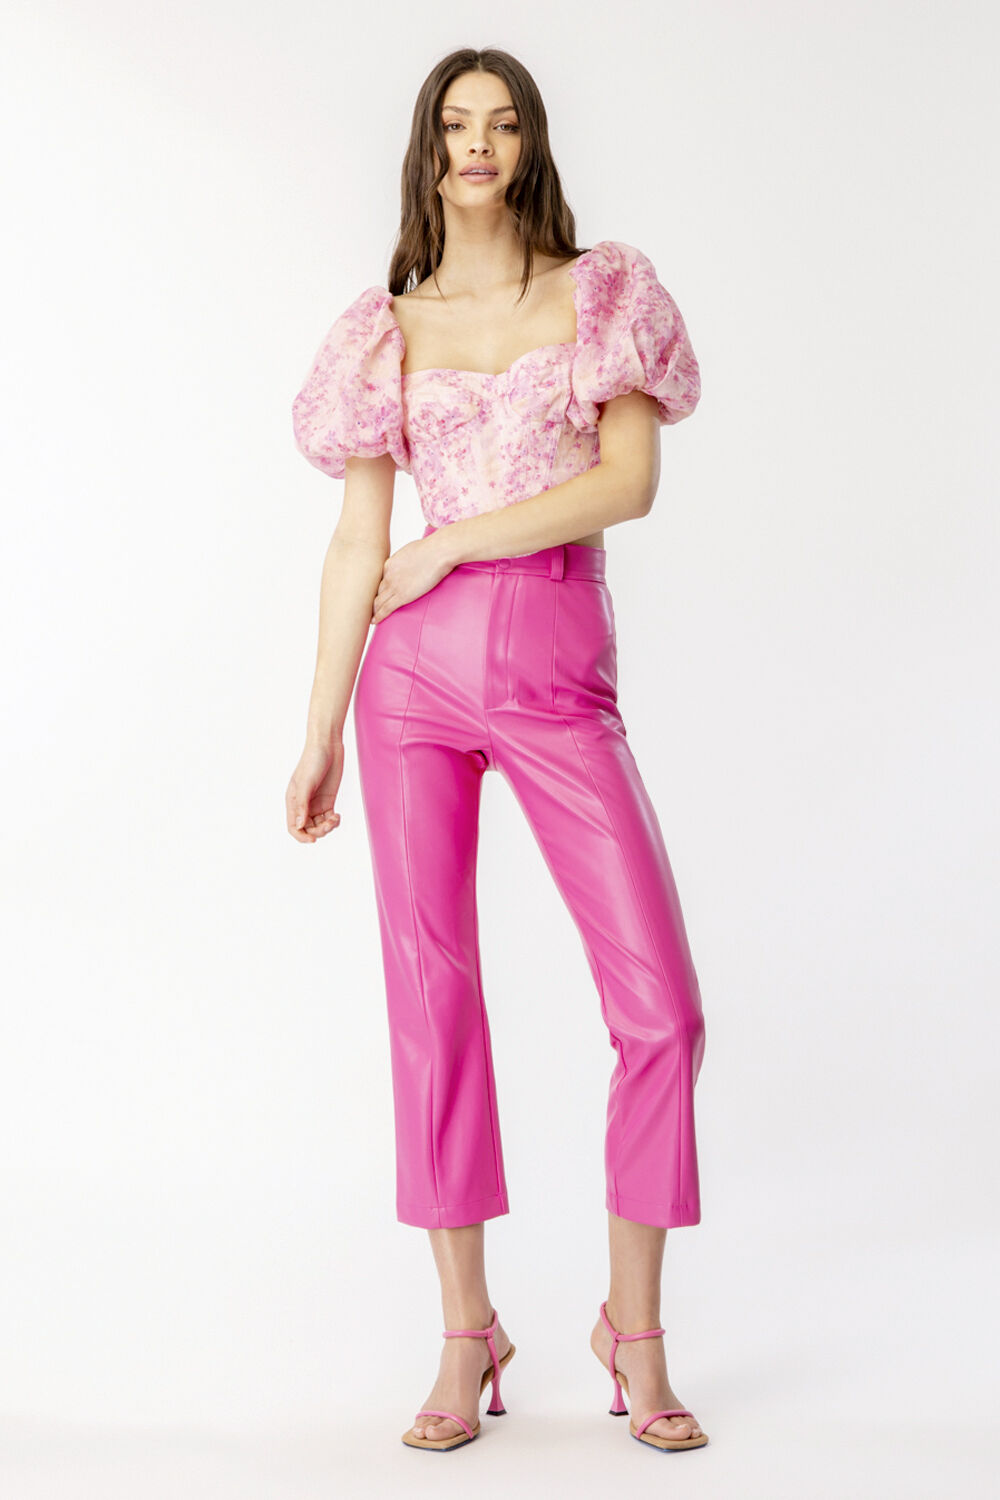 Hot Pink Pants for Men | Concitor Fuschia Mens Dress Pants